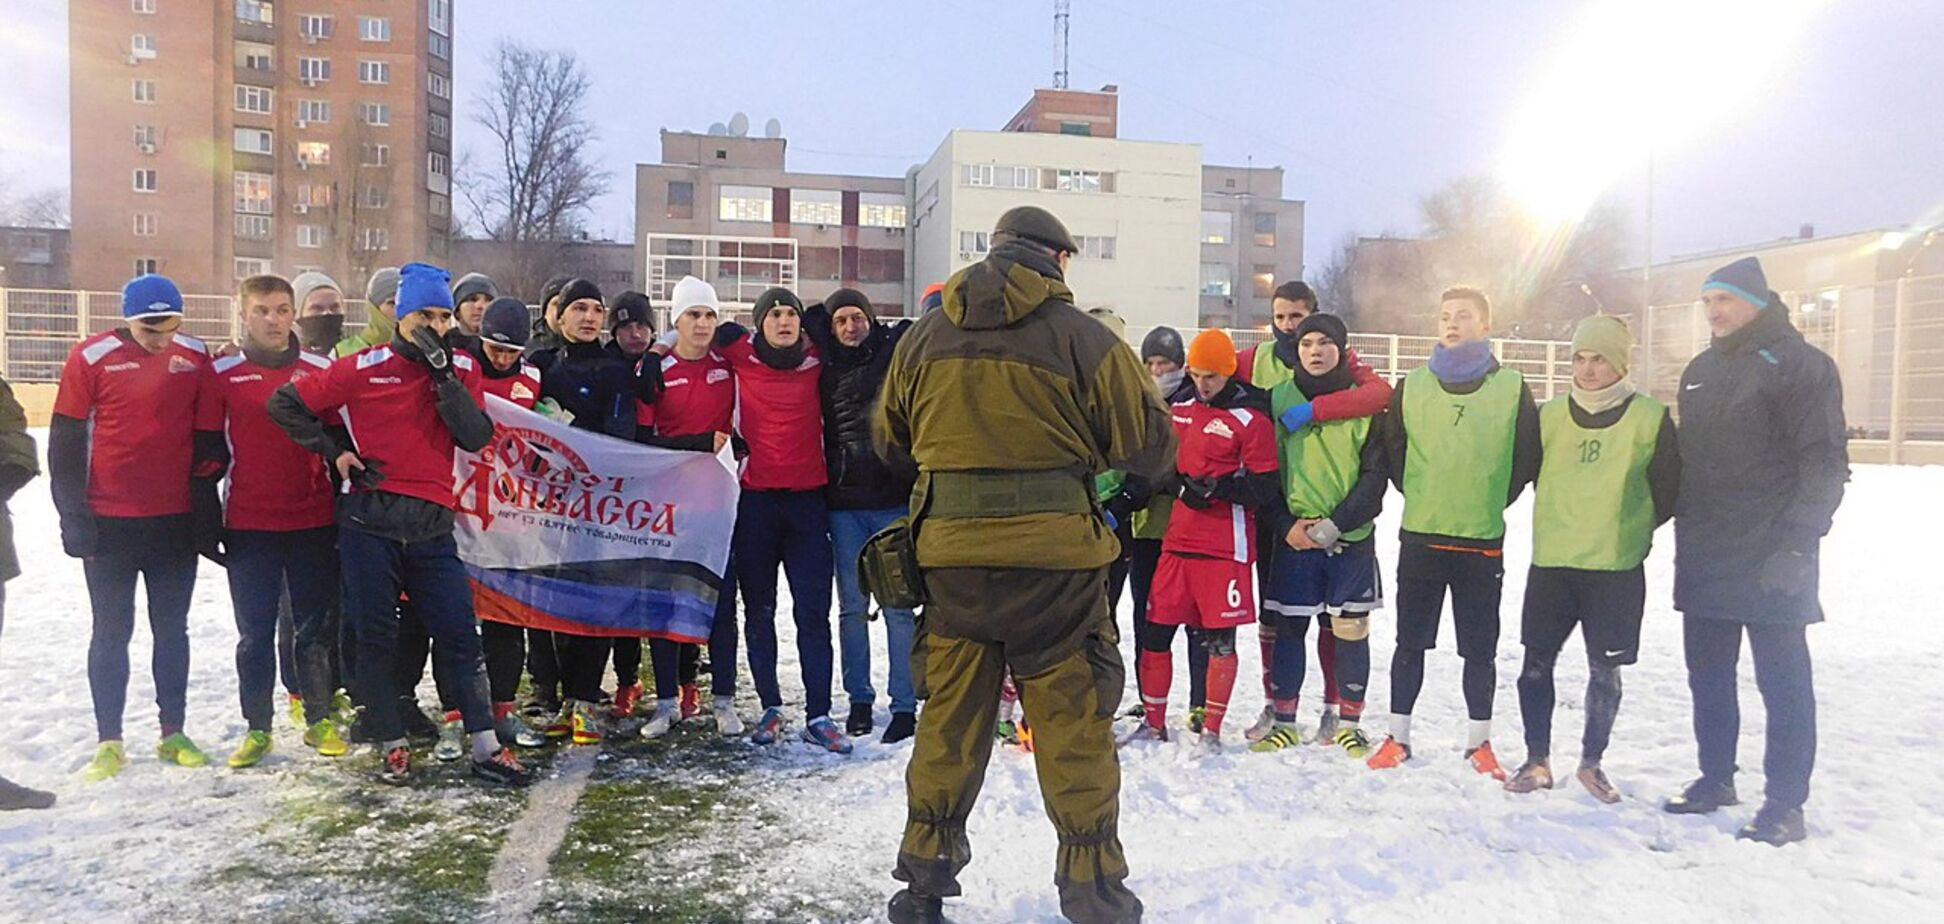 Скандал дня: футболист украинского клуба играл за 'ДНР' - фотофакт